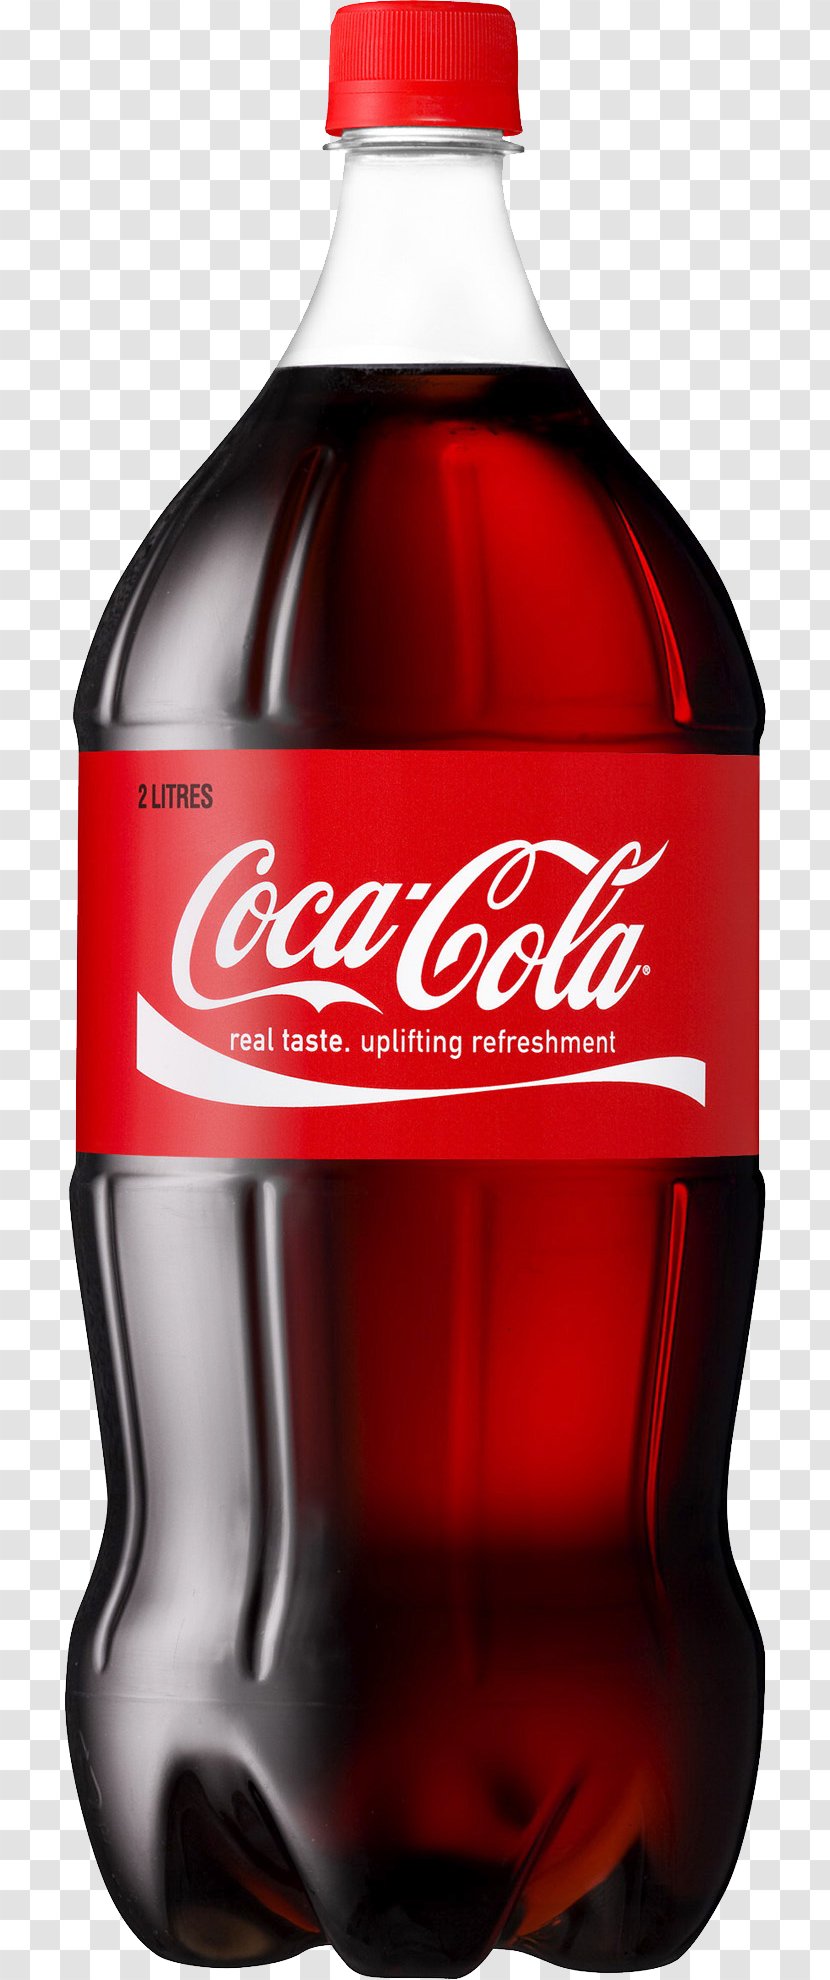 Coca Cola Bottle Image - Vanilla Transparent PNG